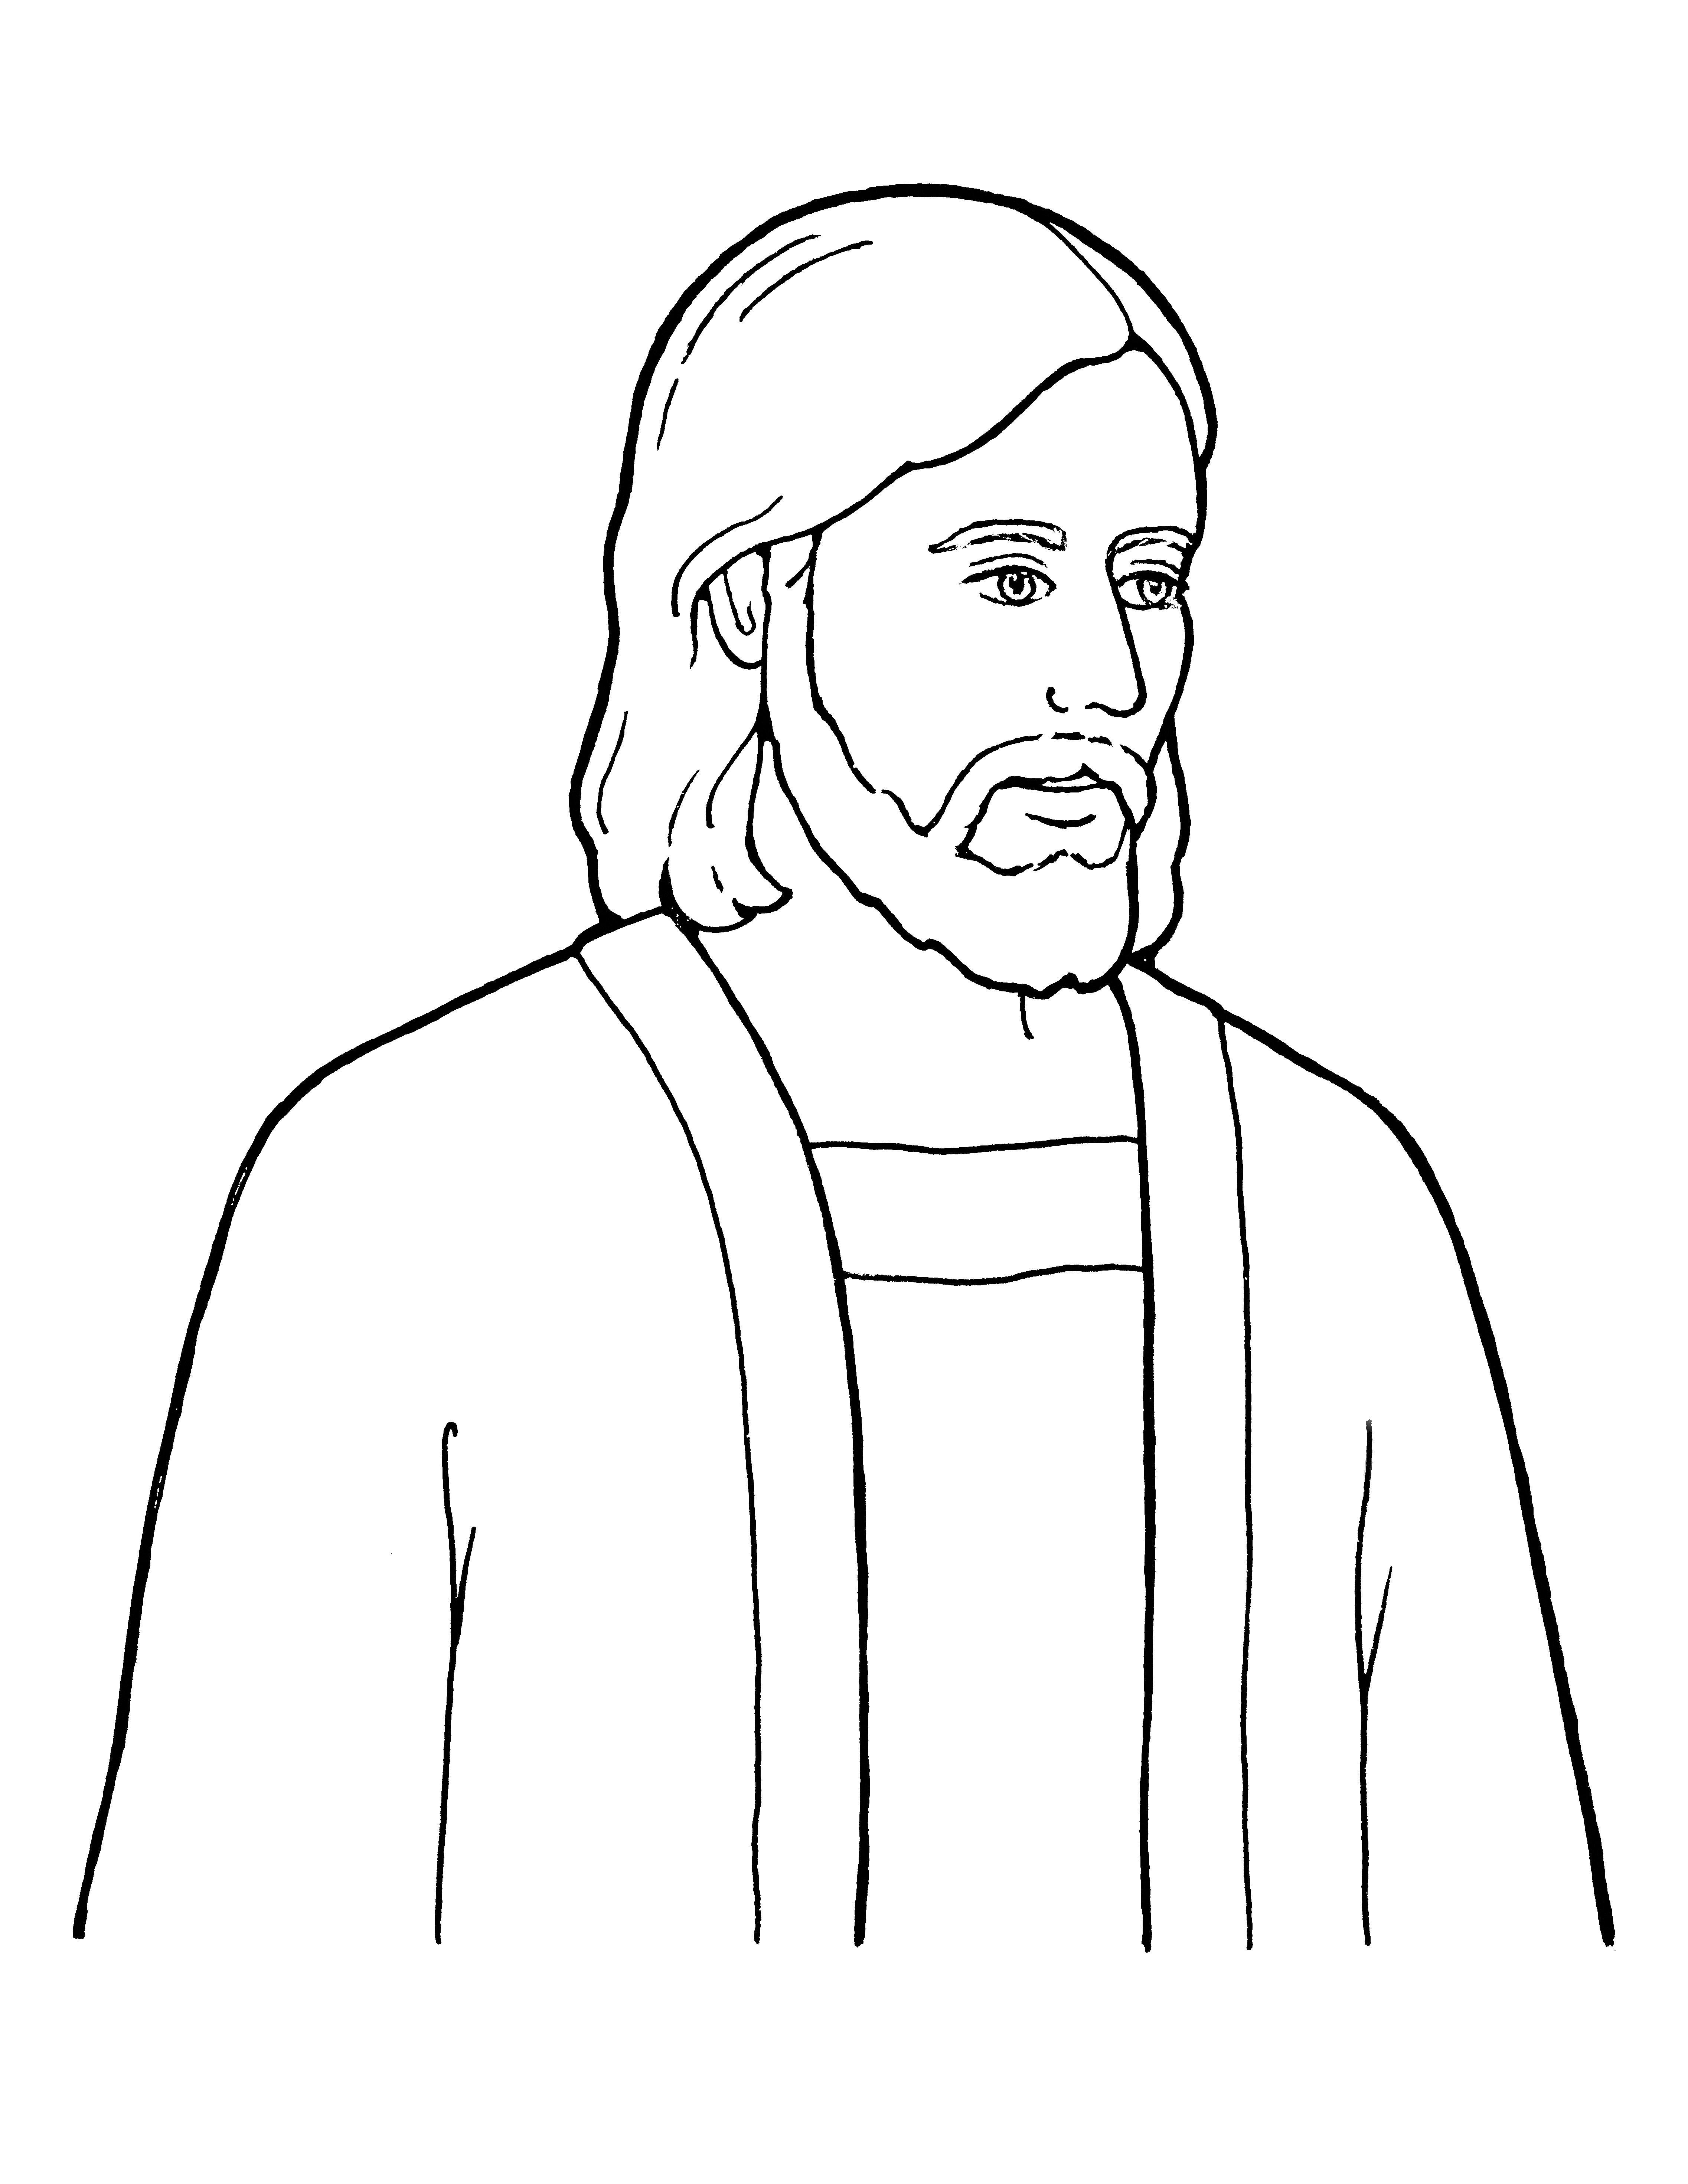 An illustration of Jesus Christ, the Savior of the world.